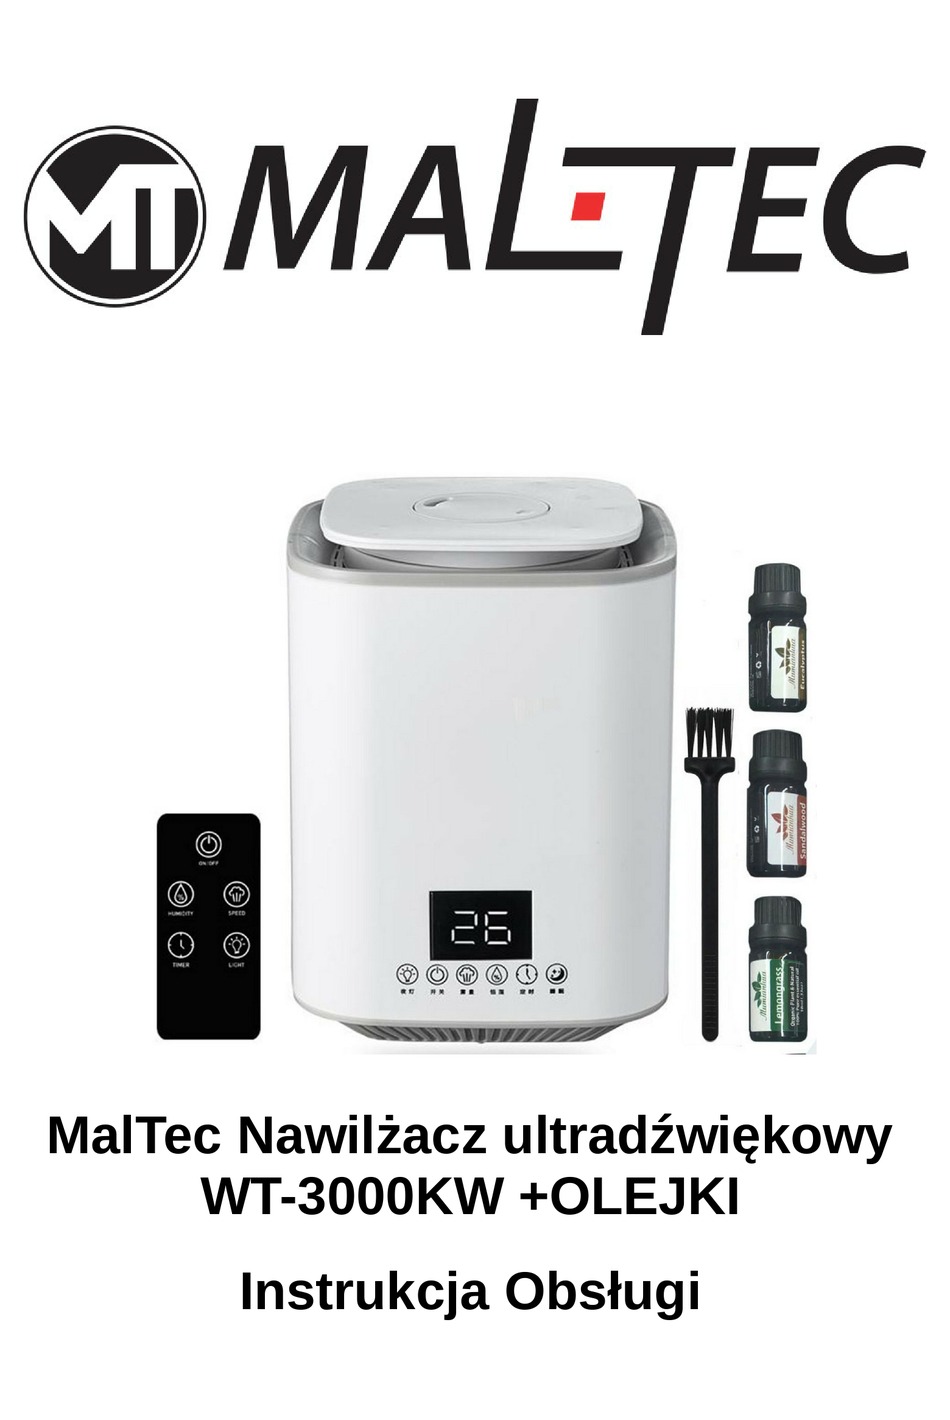 MALTEC WT-3000KW INSTRUCTION MANUAL Pdf Download | ManualsLib